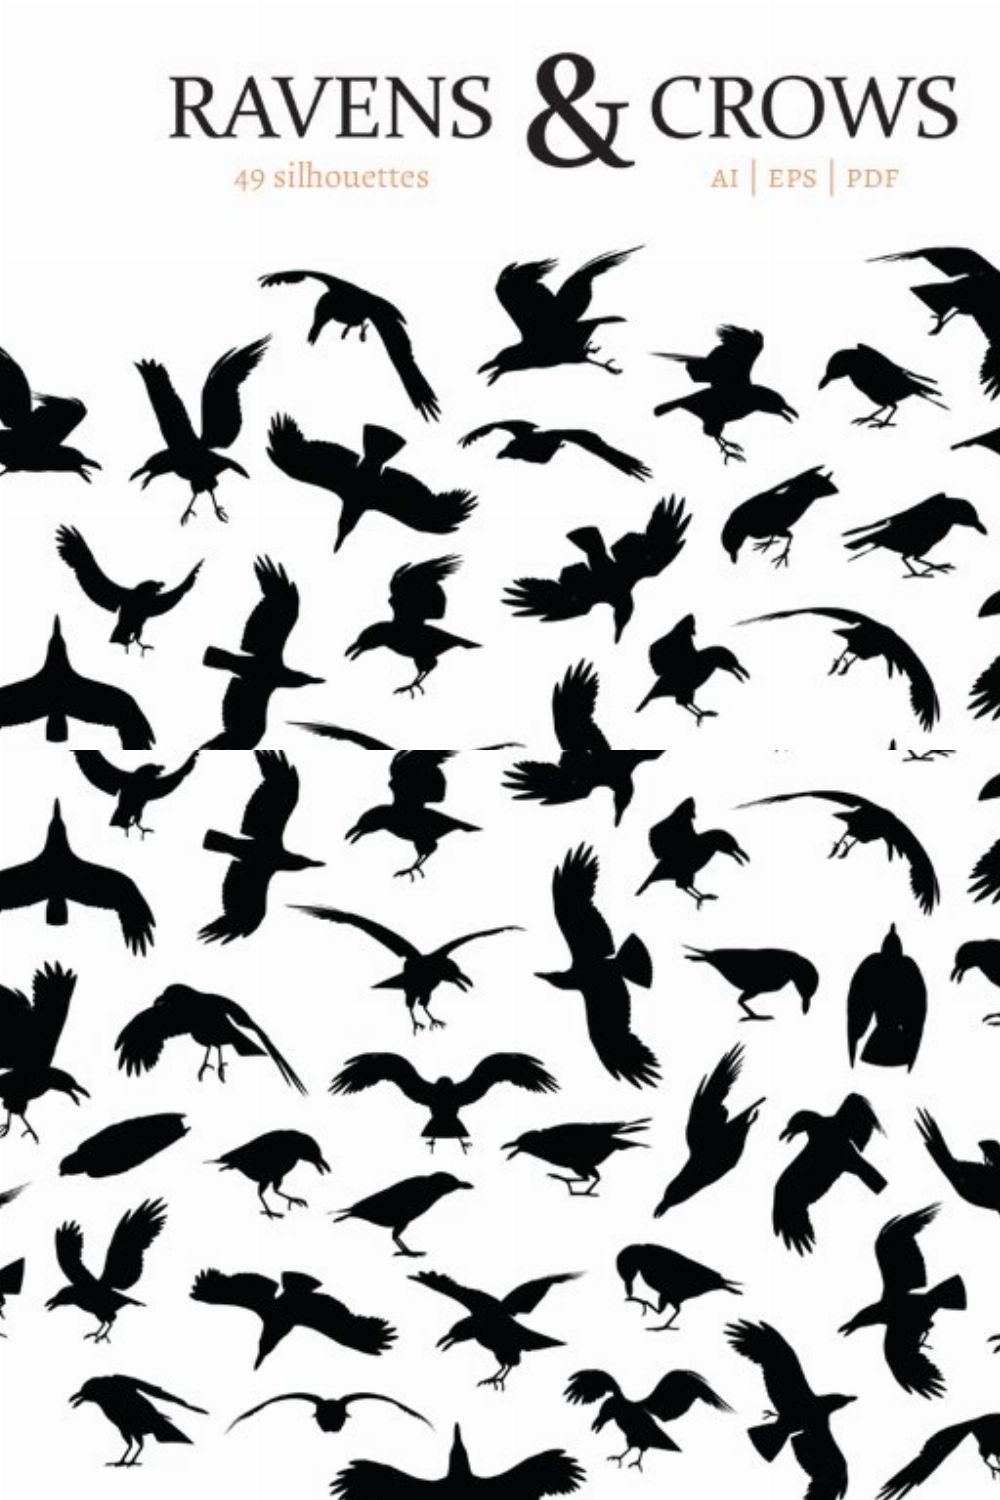 Ravens & Crows pinterest preview image.